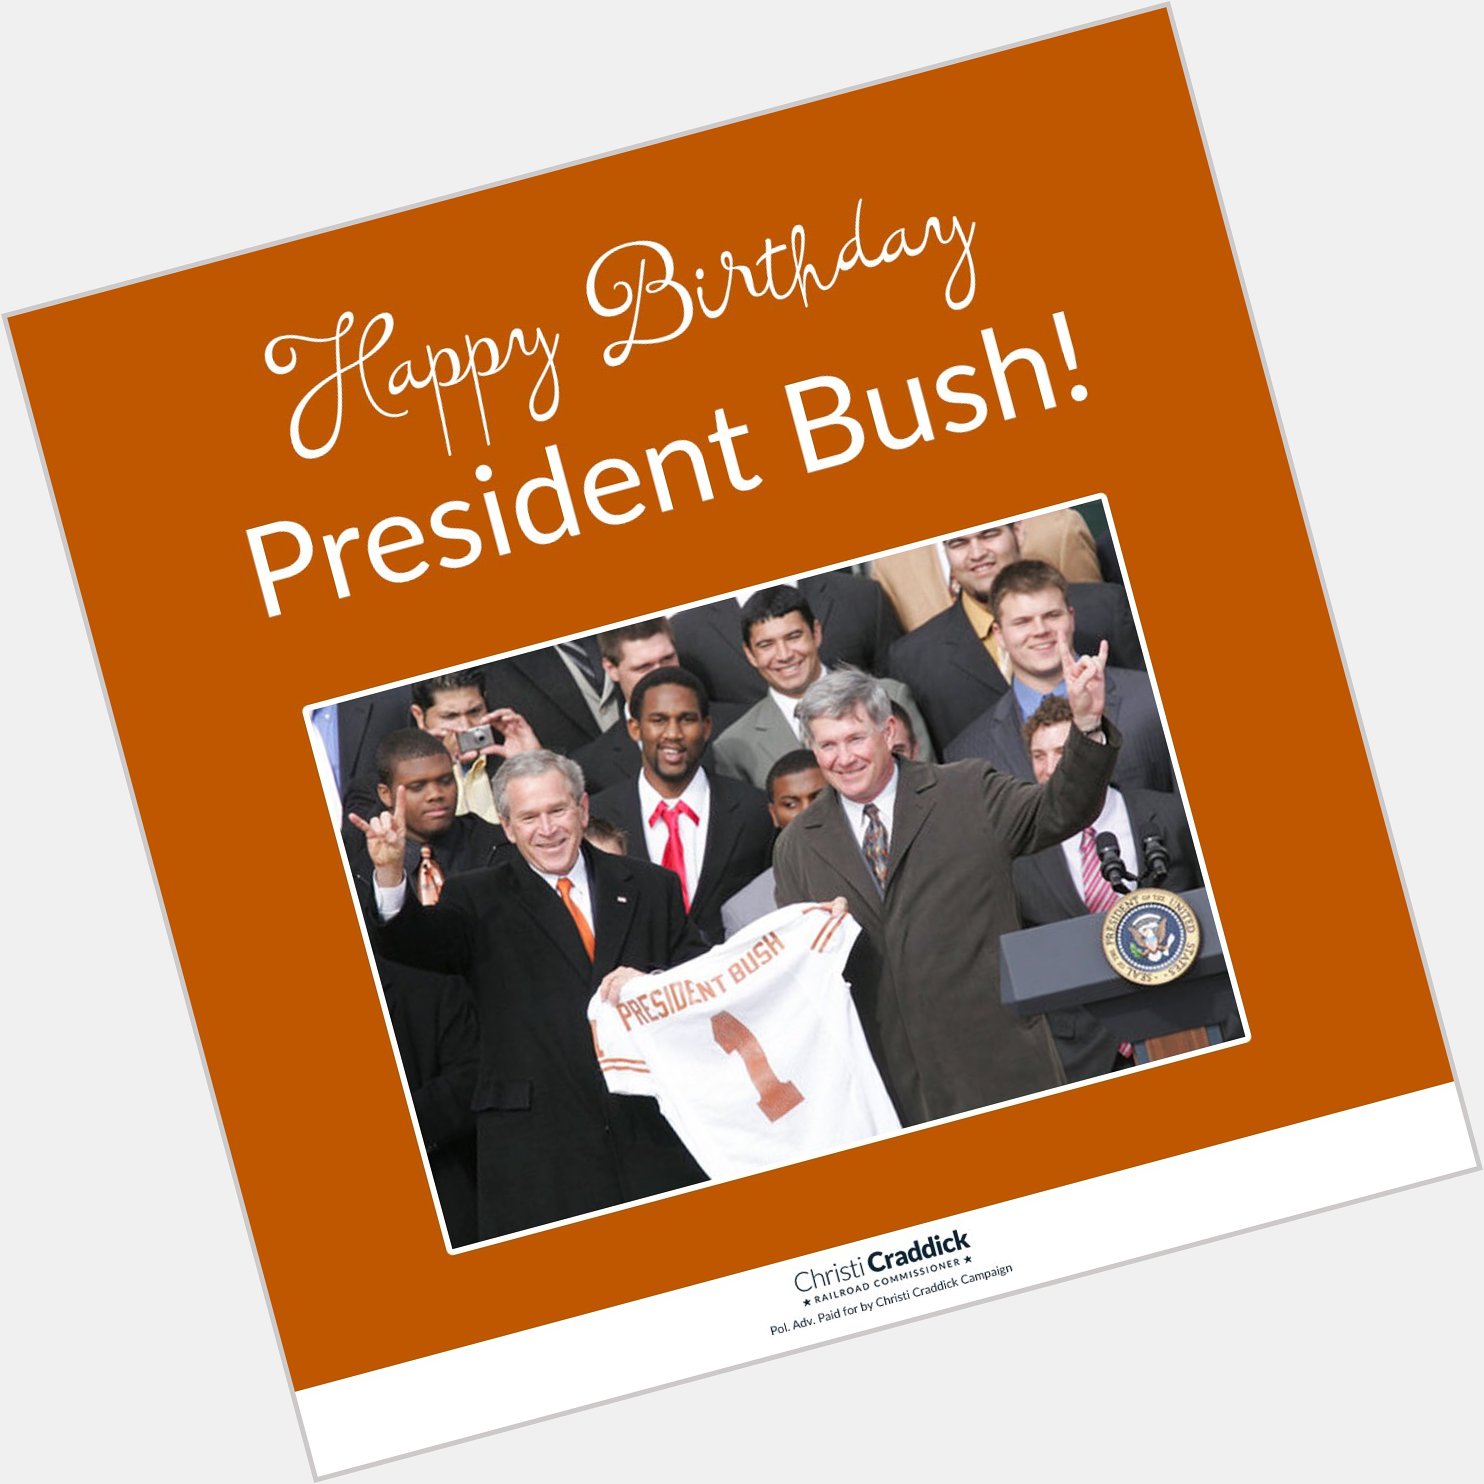 Happy birthday today to a great Texan and fellow Midlander, President George W. Bush! 